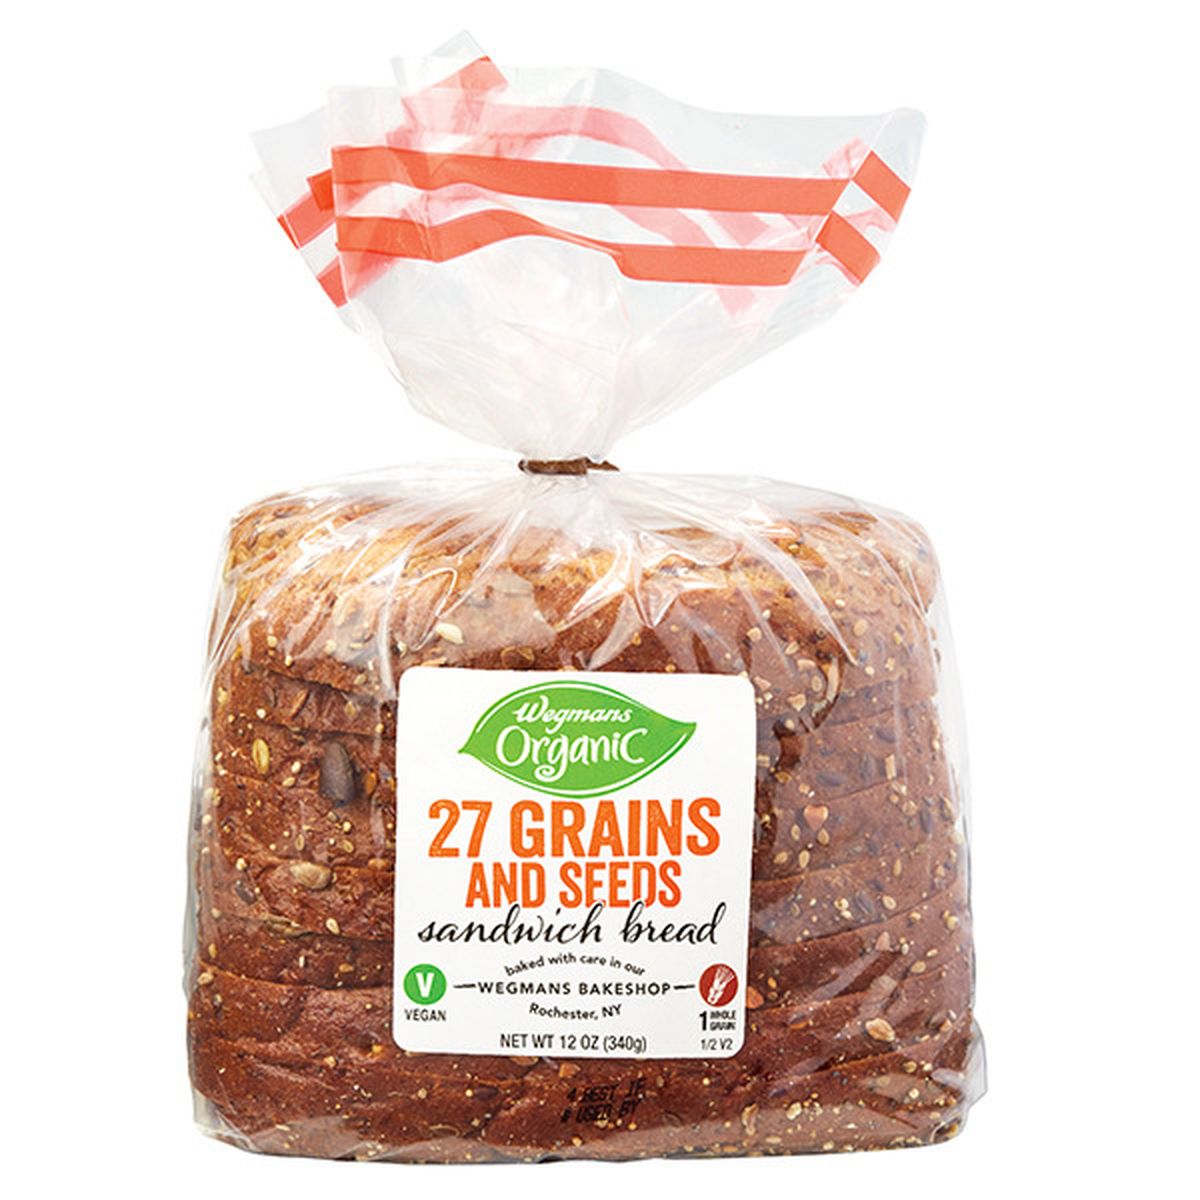 Calories in Wegmans Organic 27 Grains and Seeds Sandwich Bread, Half Loaf